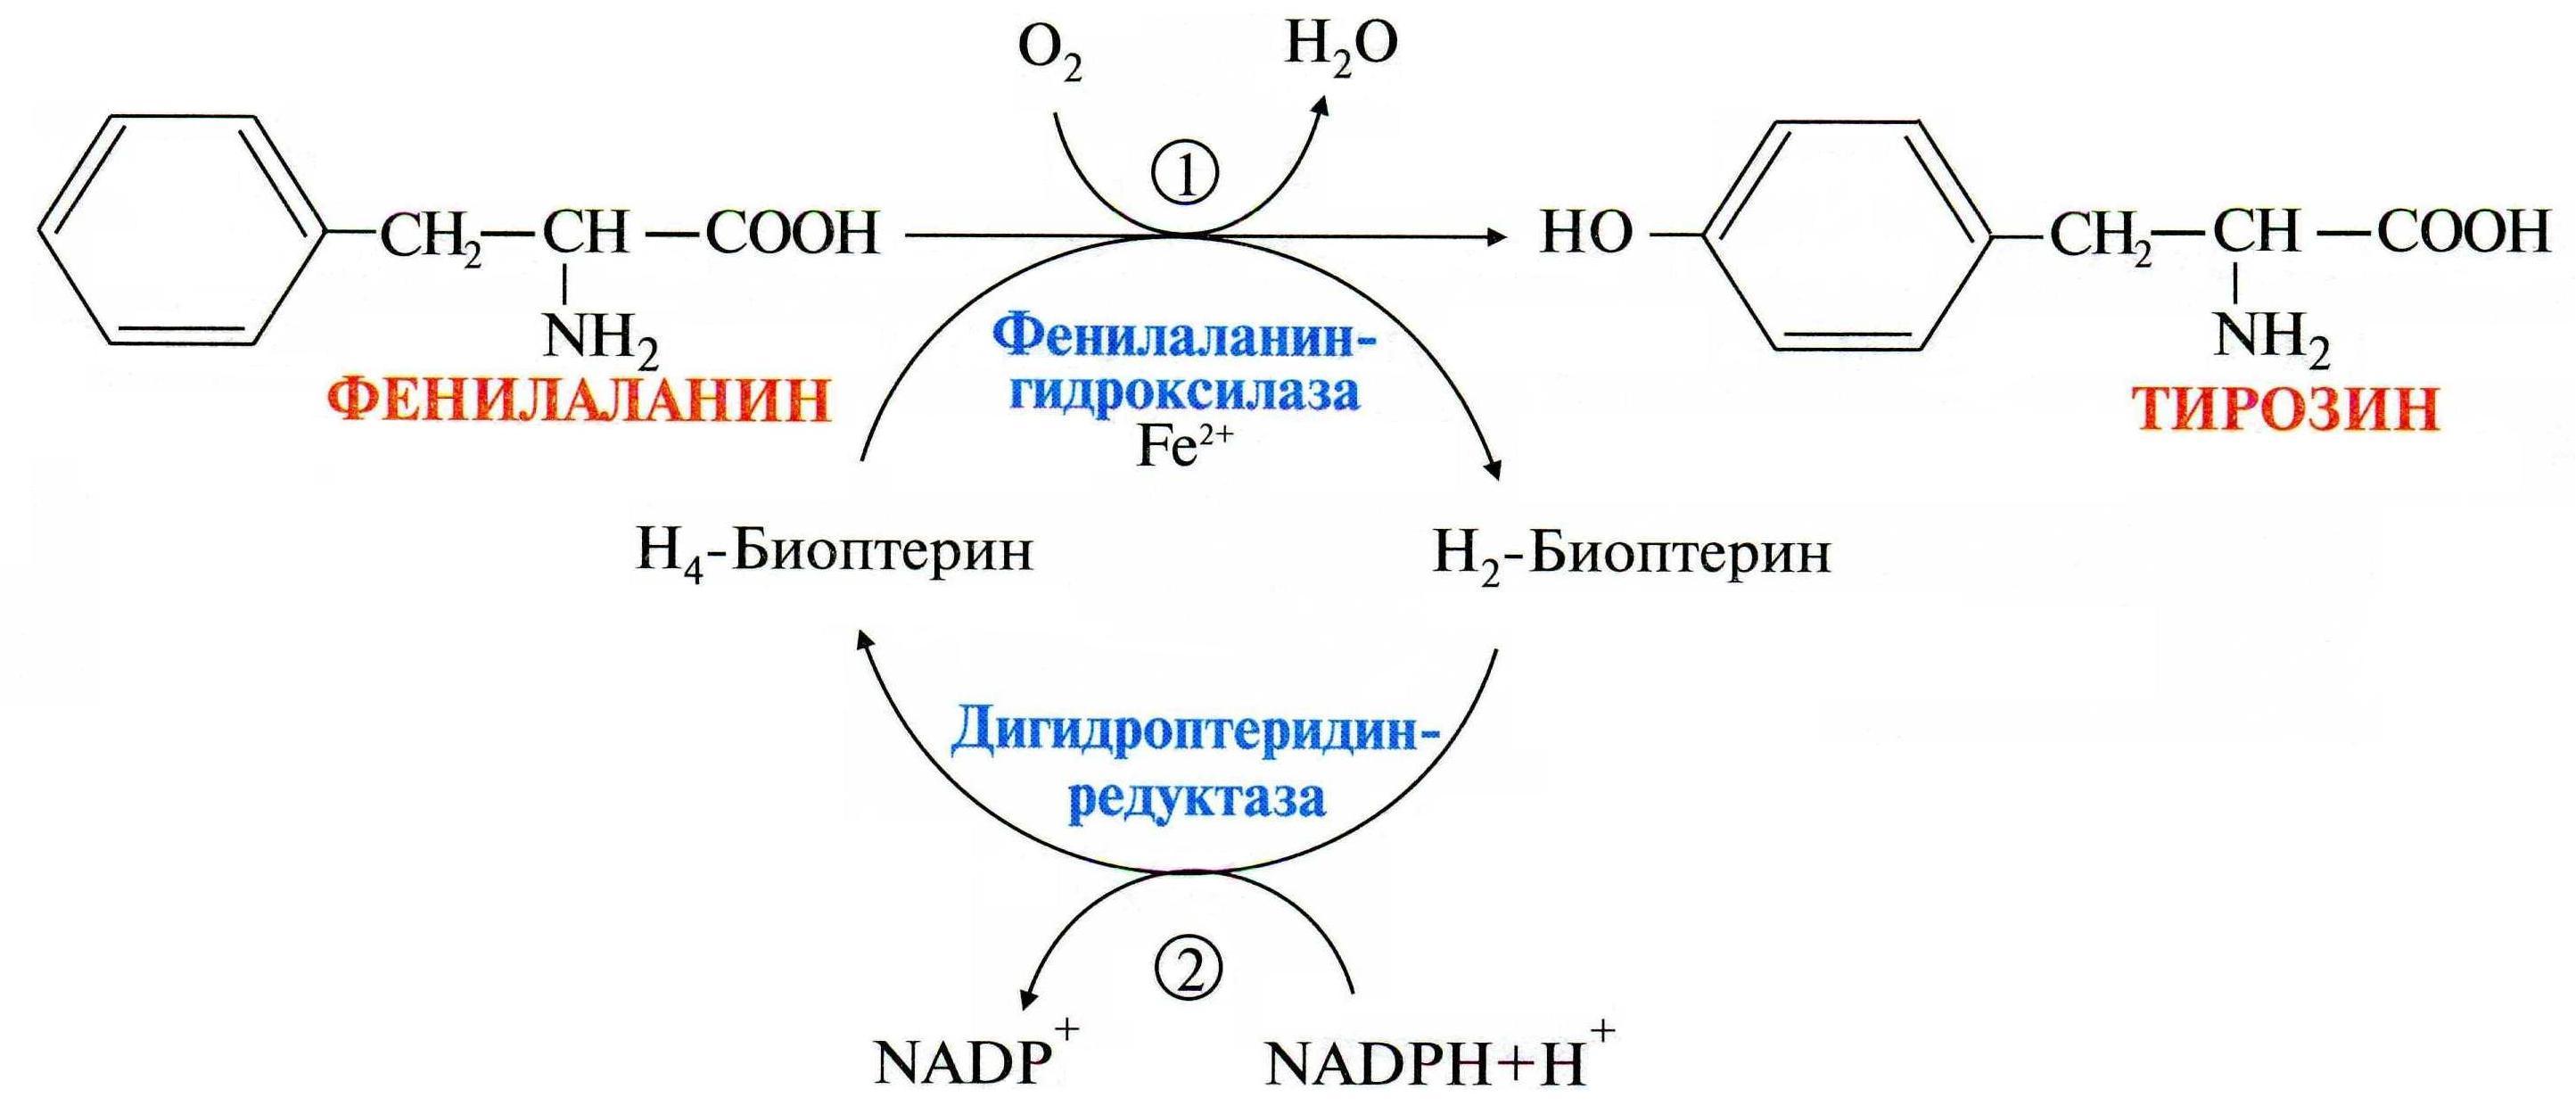 Фенилаланин биохимия. Образование тирозина из фенилаланина реакция. Реакция превращения фенилаланина в тирозин. Схема превращения фенилаланина. Реакция синтеза тирозина.